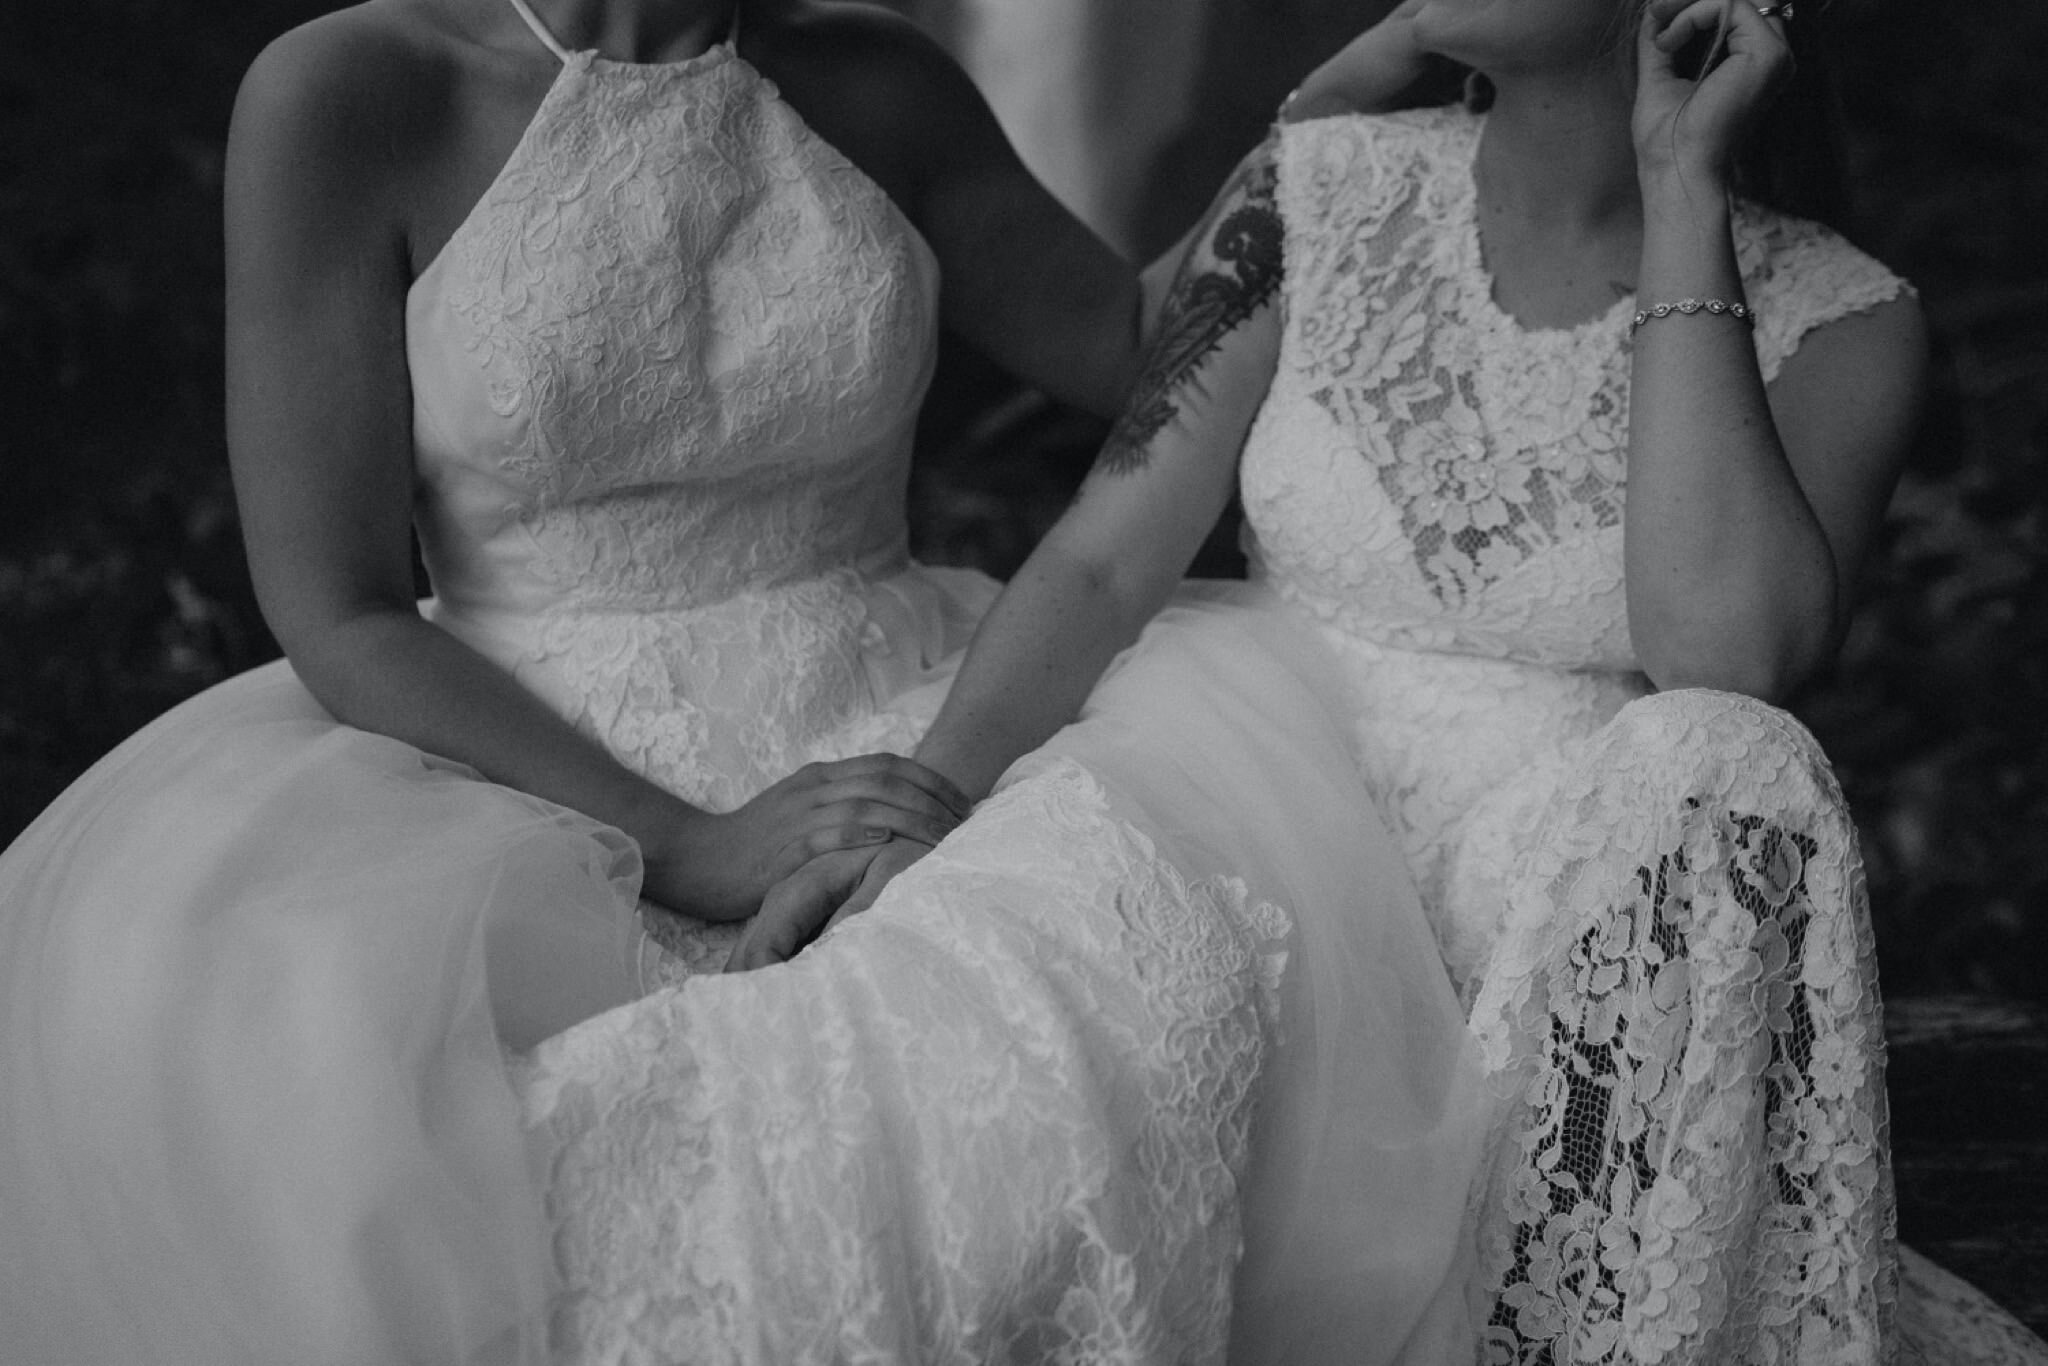 Snoqualmie Falls Wedding At Salish Lodge Same Sex Lesbian Brides Elopement